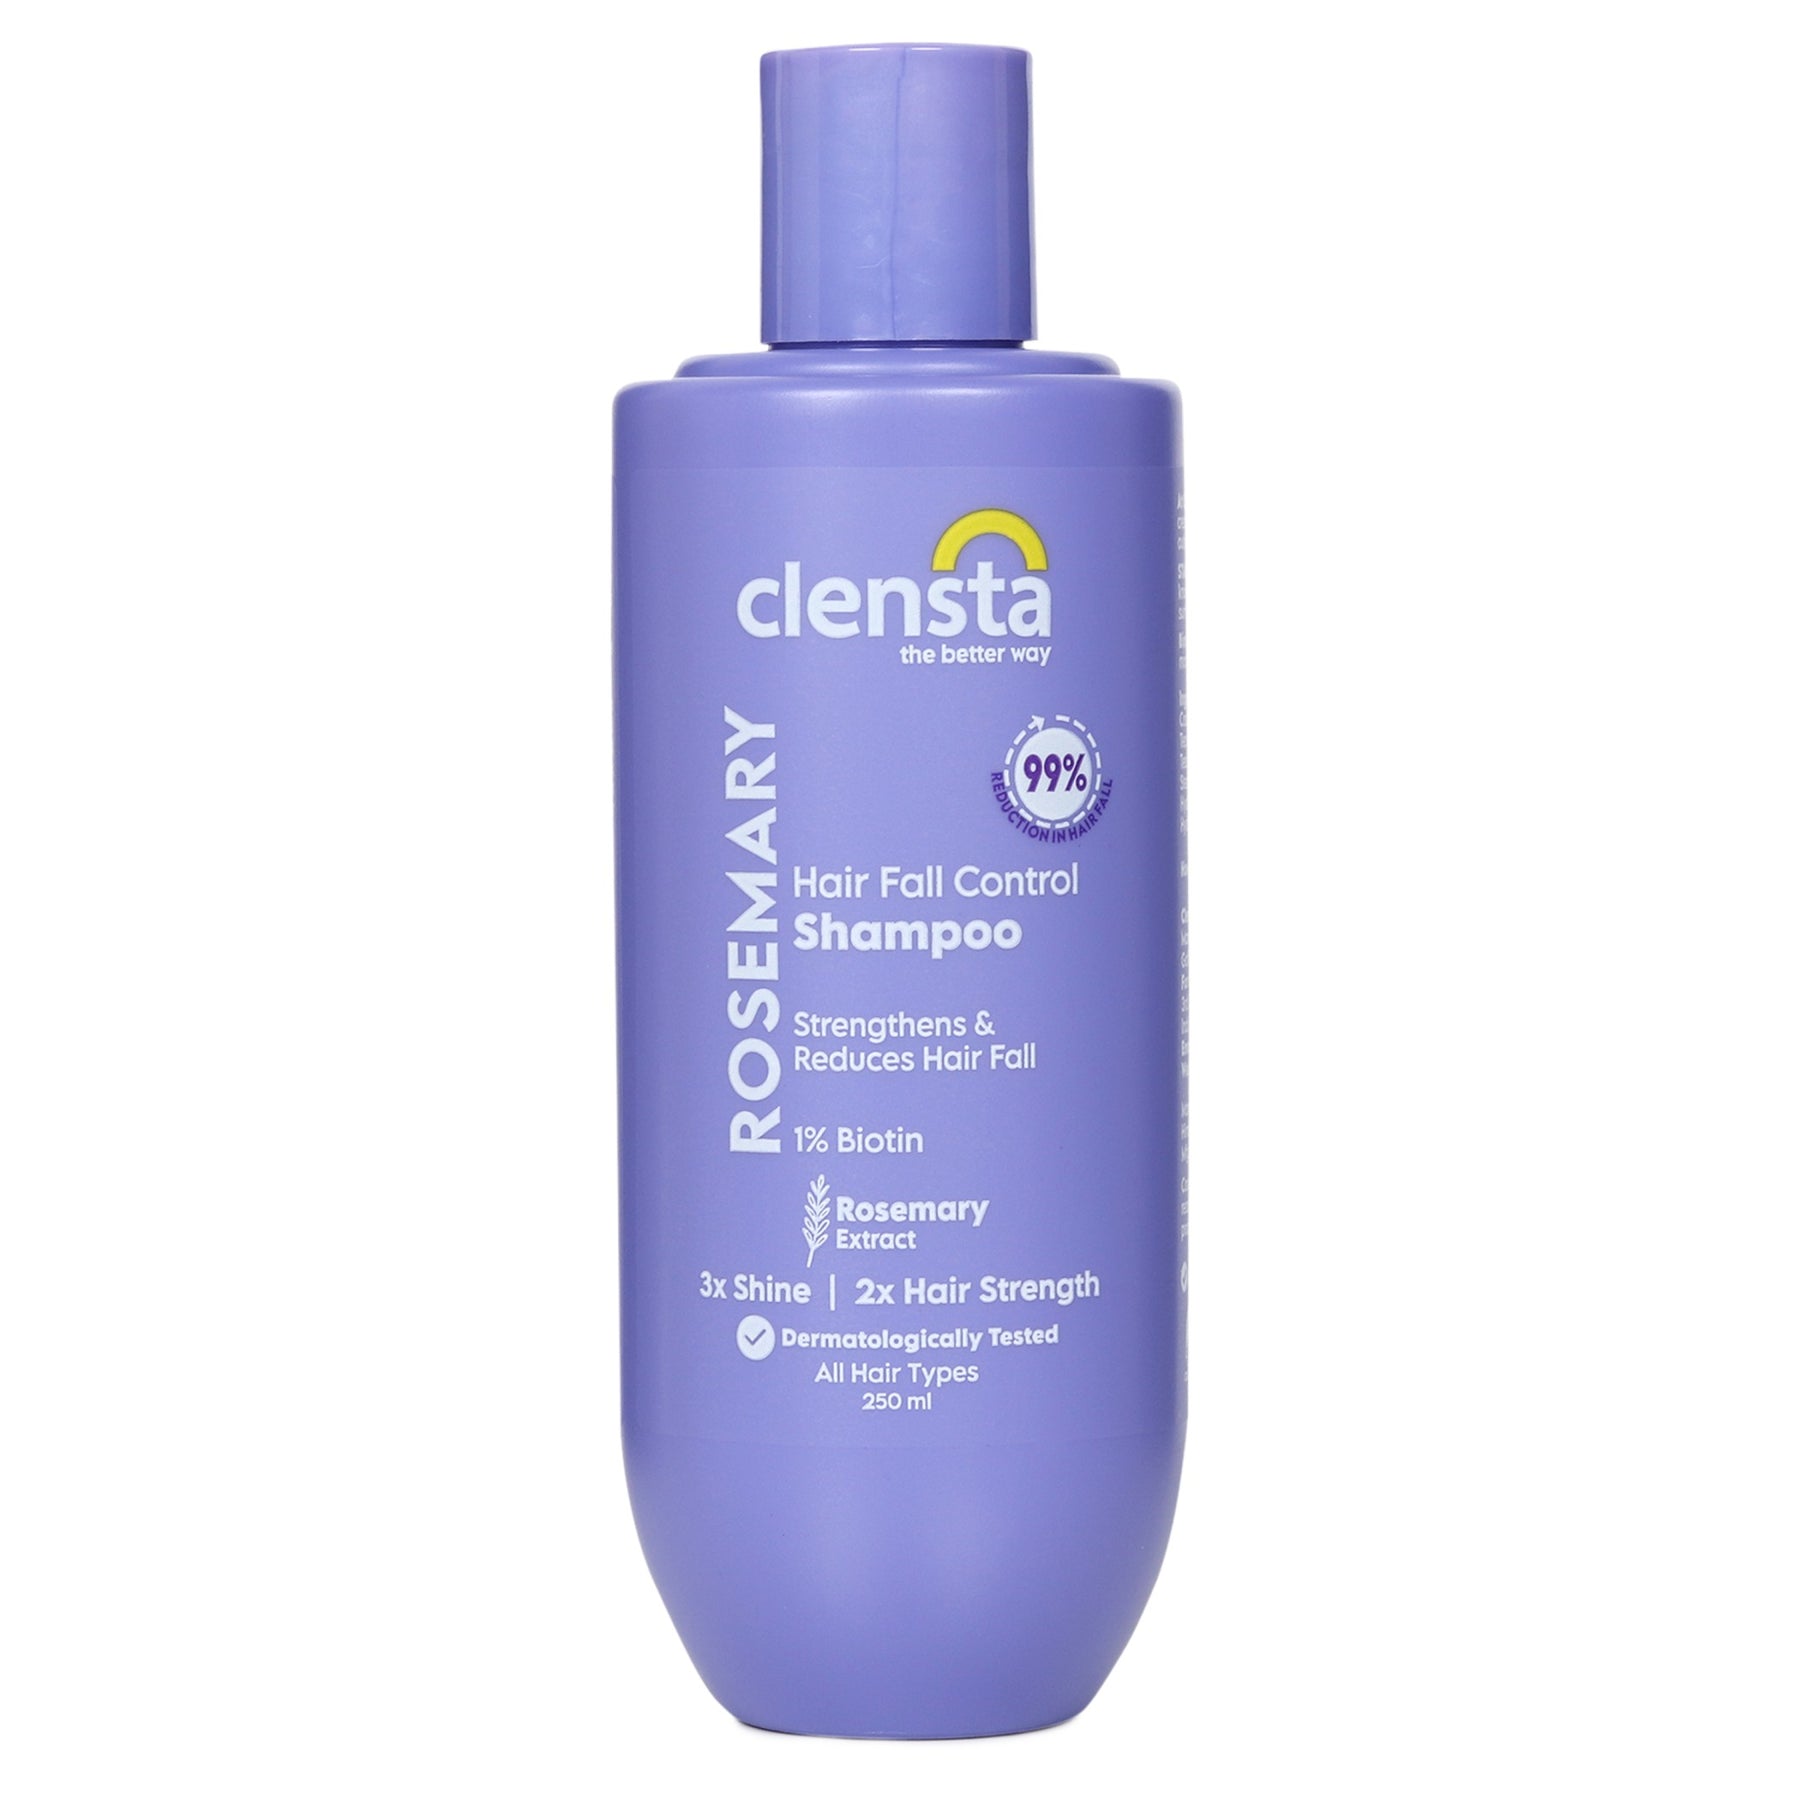 Rosemary Hair Fall Control Shampoo with 1% Biotin for Stronger Hair & Reduced Hair Fall